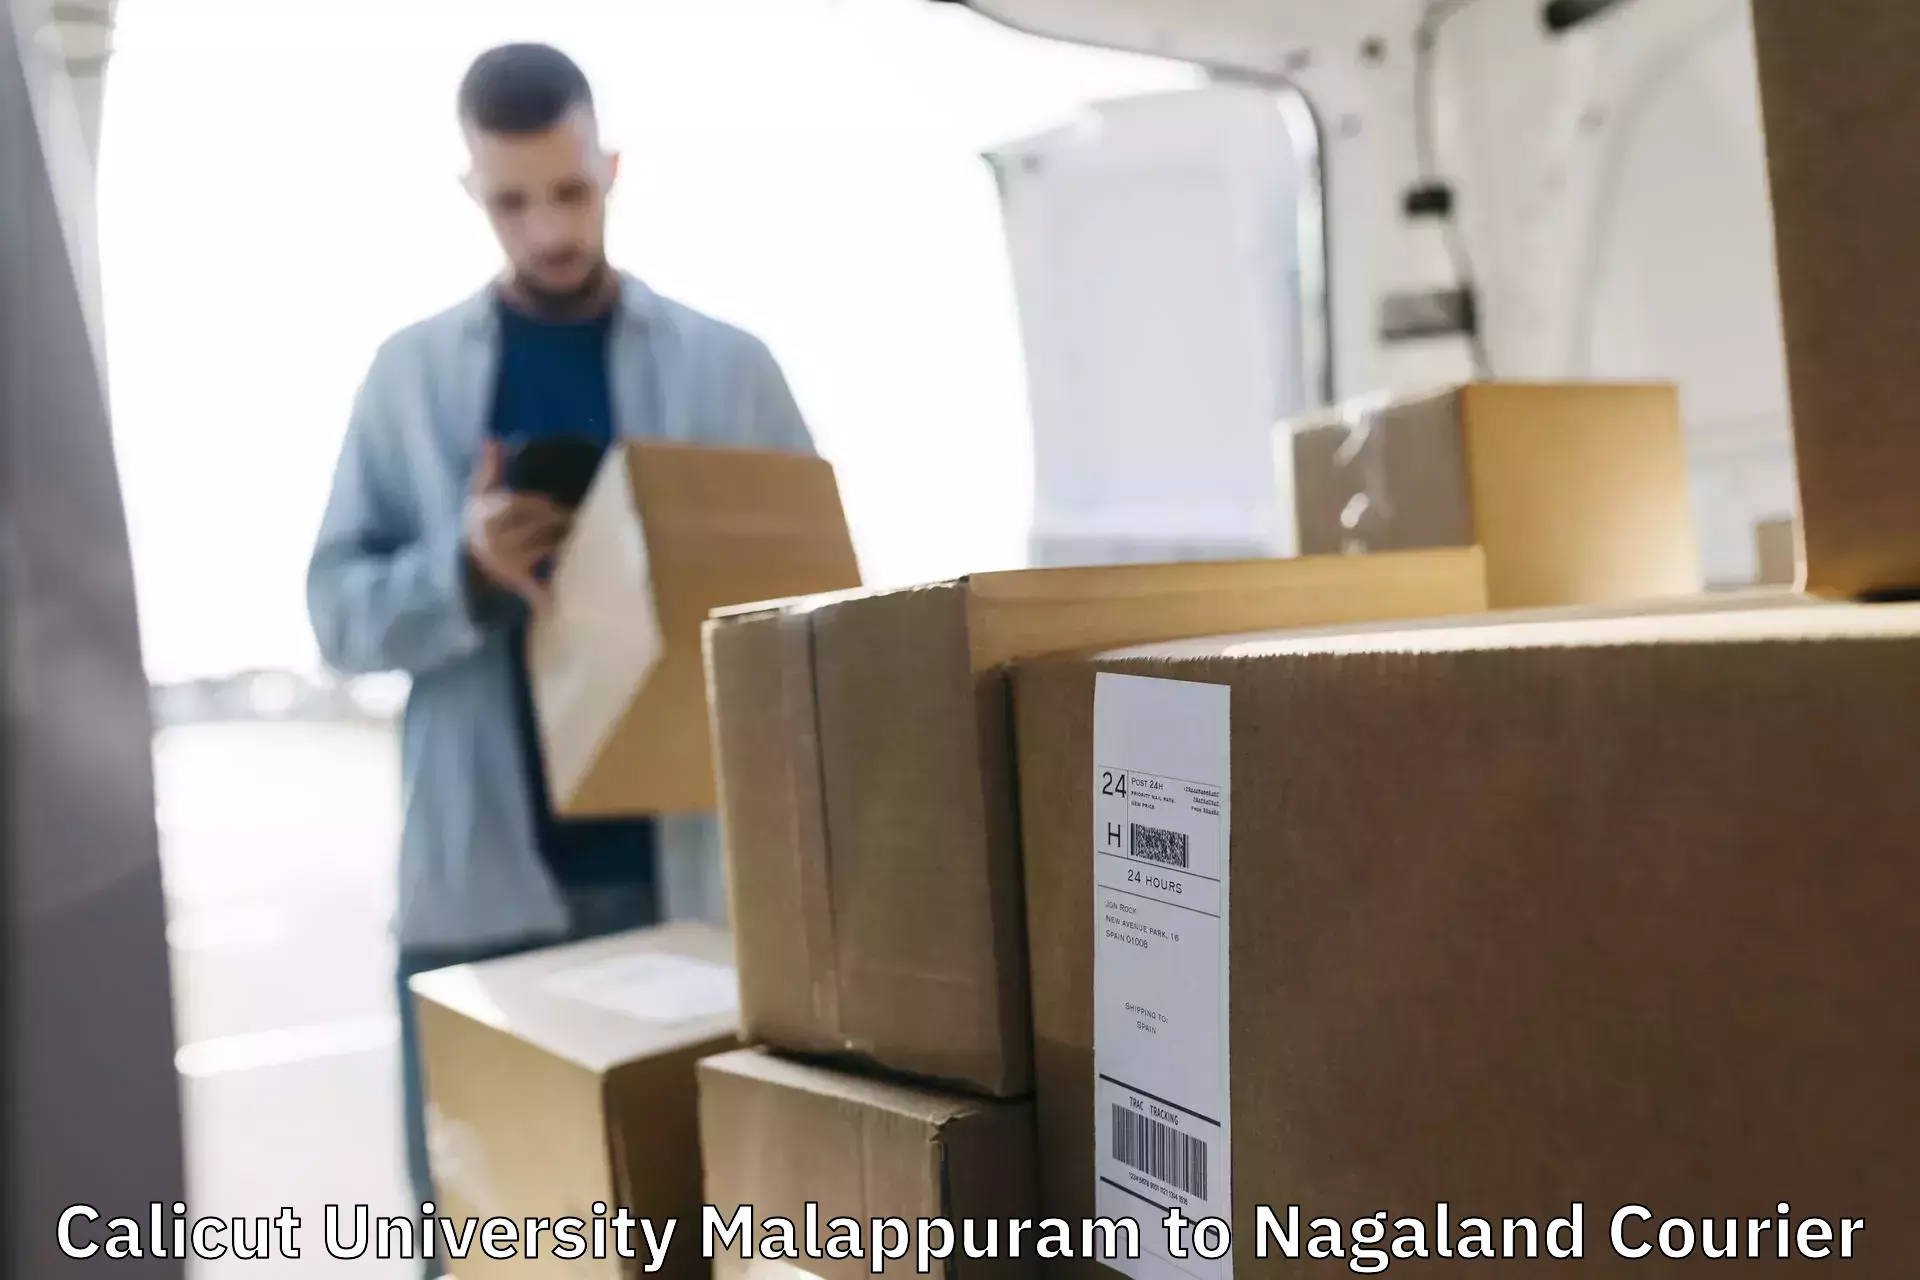 Express logistics service Calicut University Malappuram to Dimapur